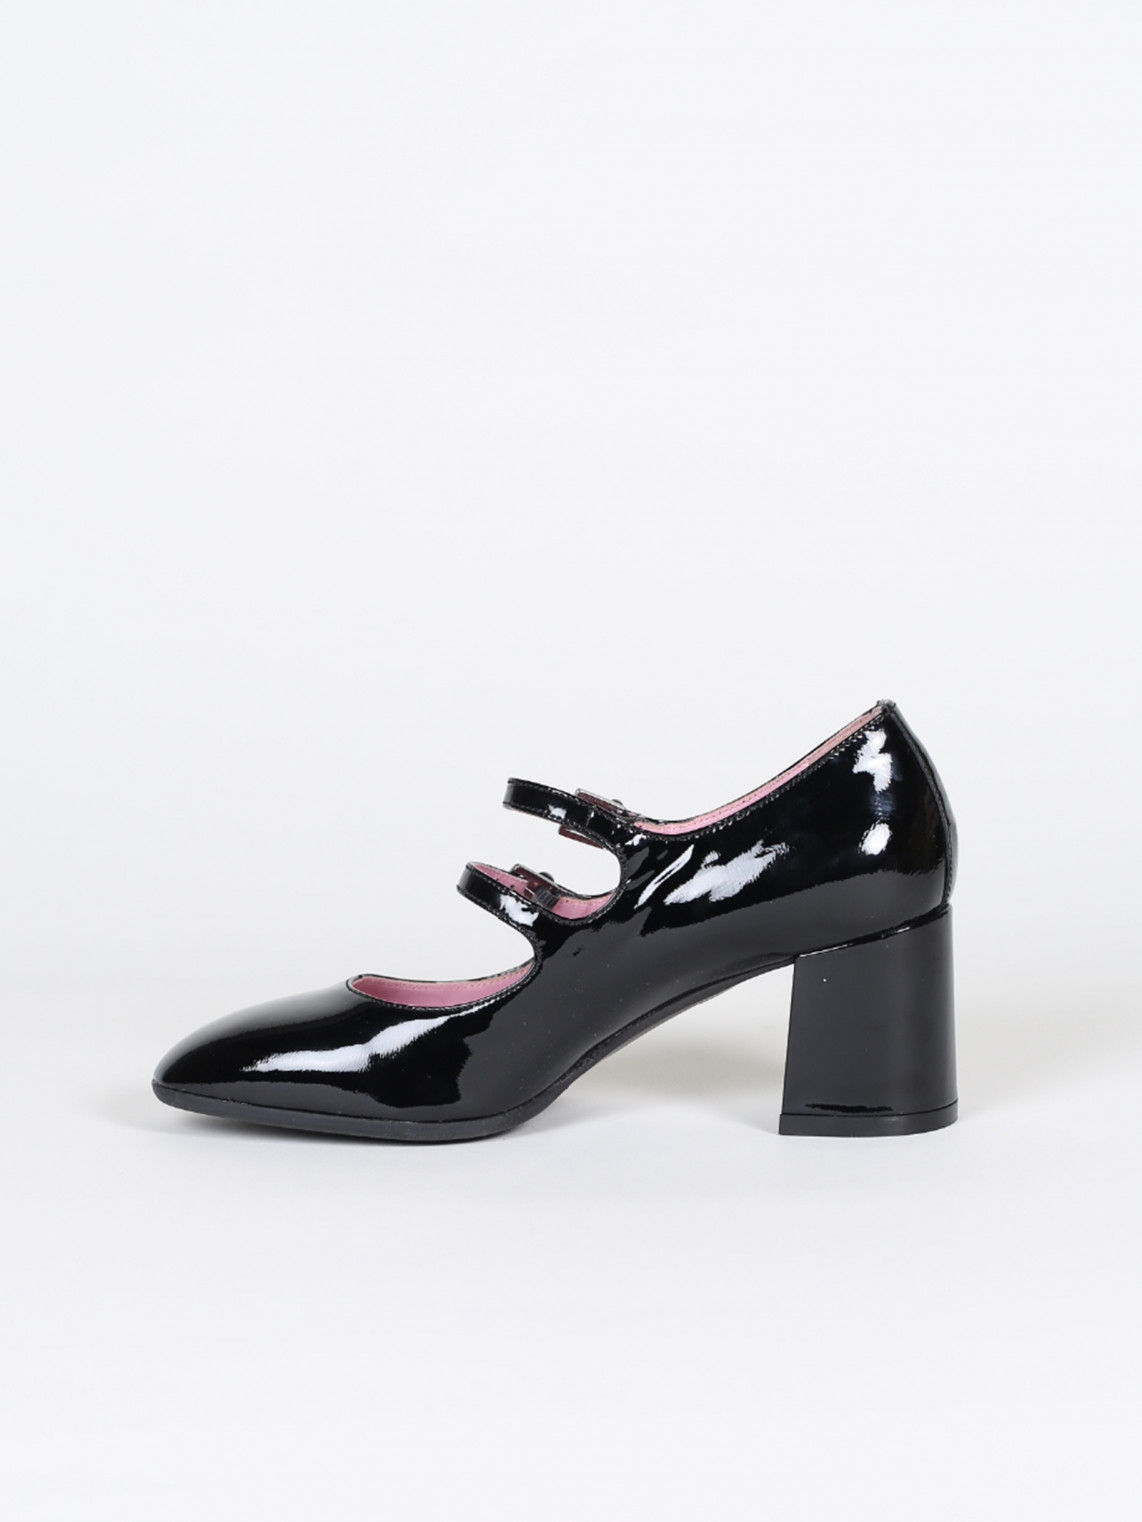 ALICE black patent leather Mary Janes Carel Paris Shoes